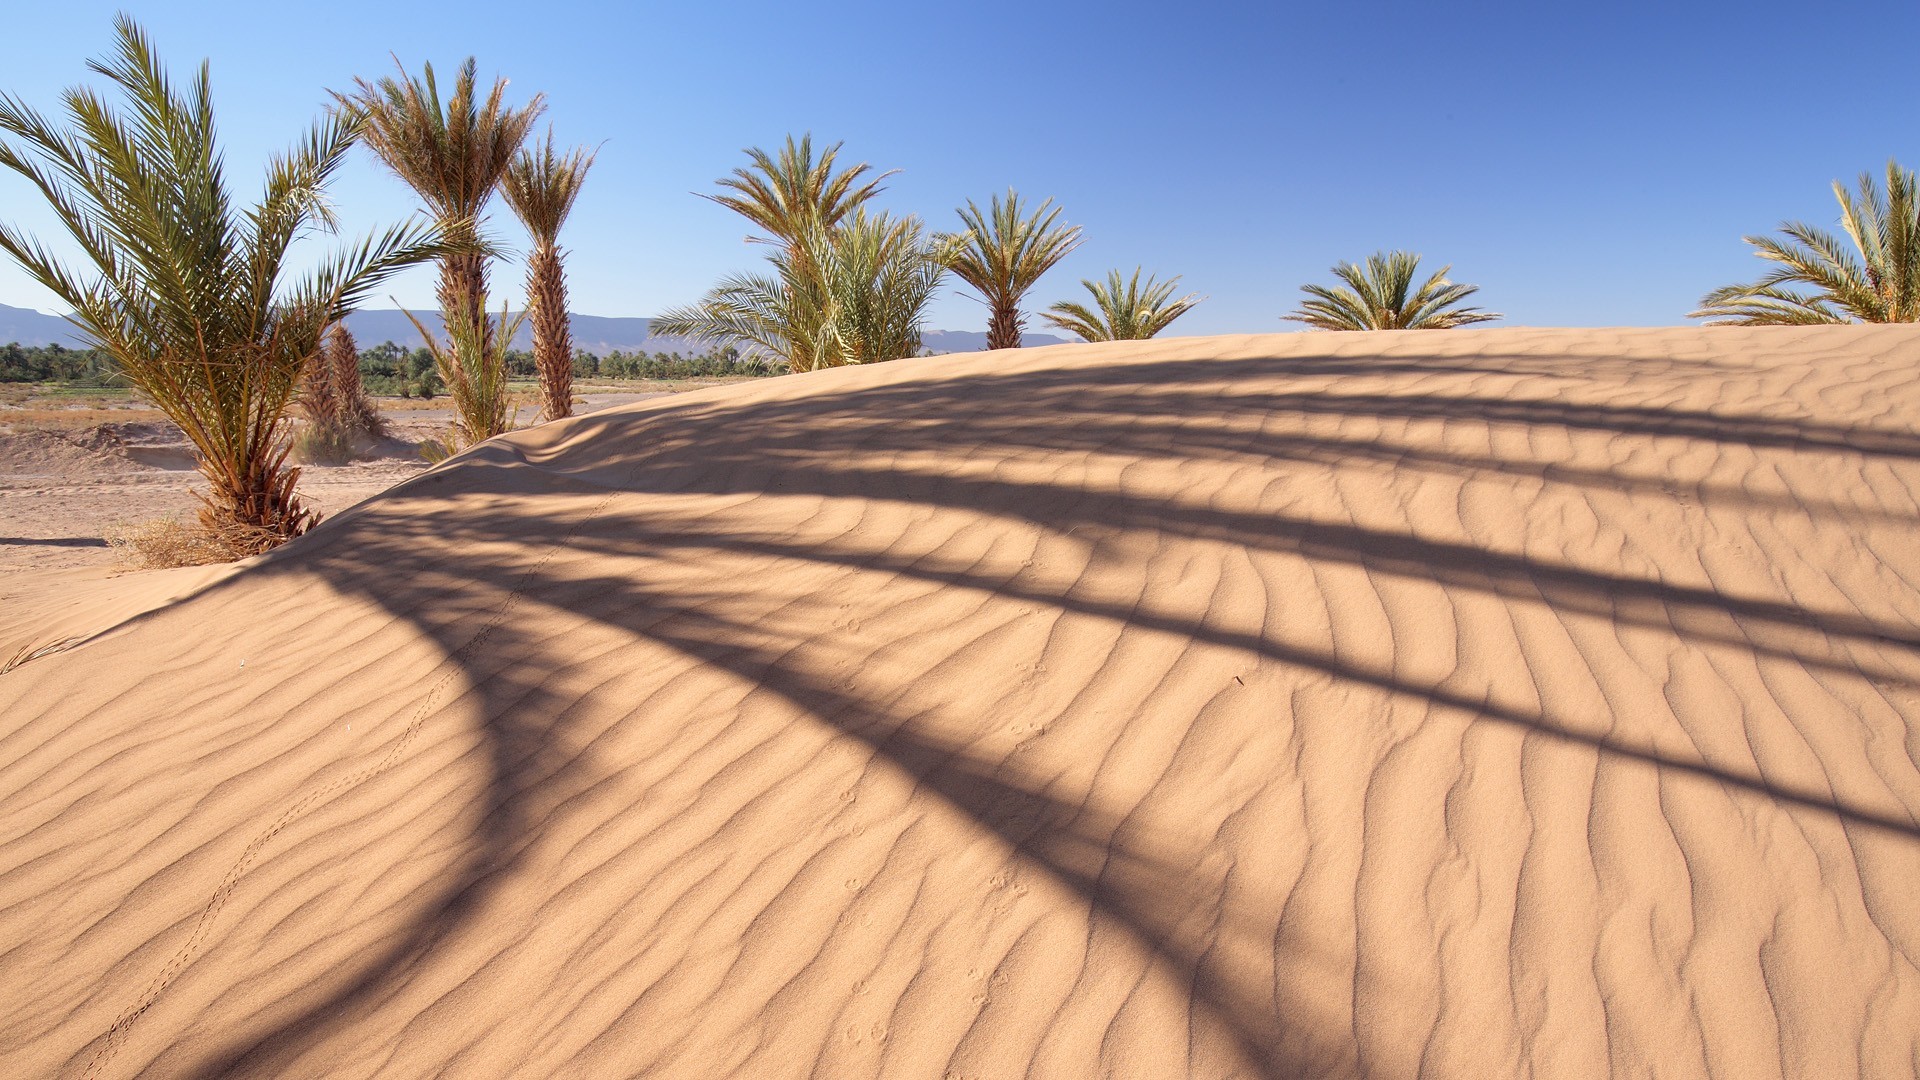 General 1920x1080 nature landscape palm trees sand desert dunes shadow trees hills